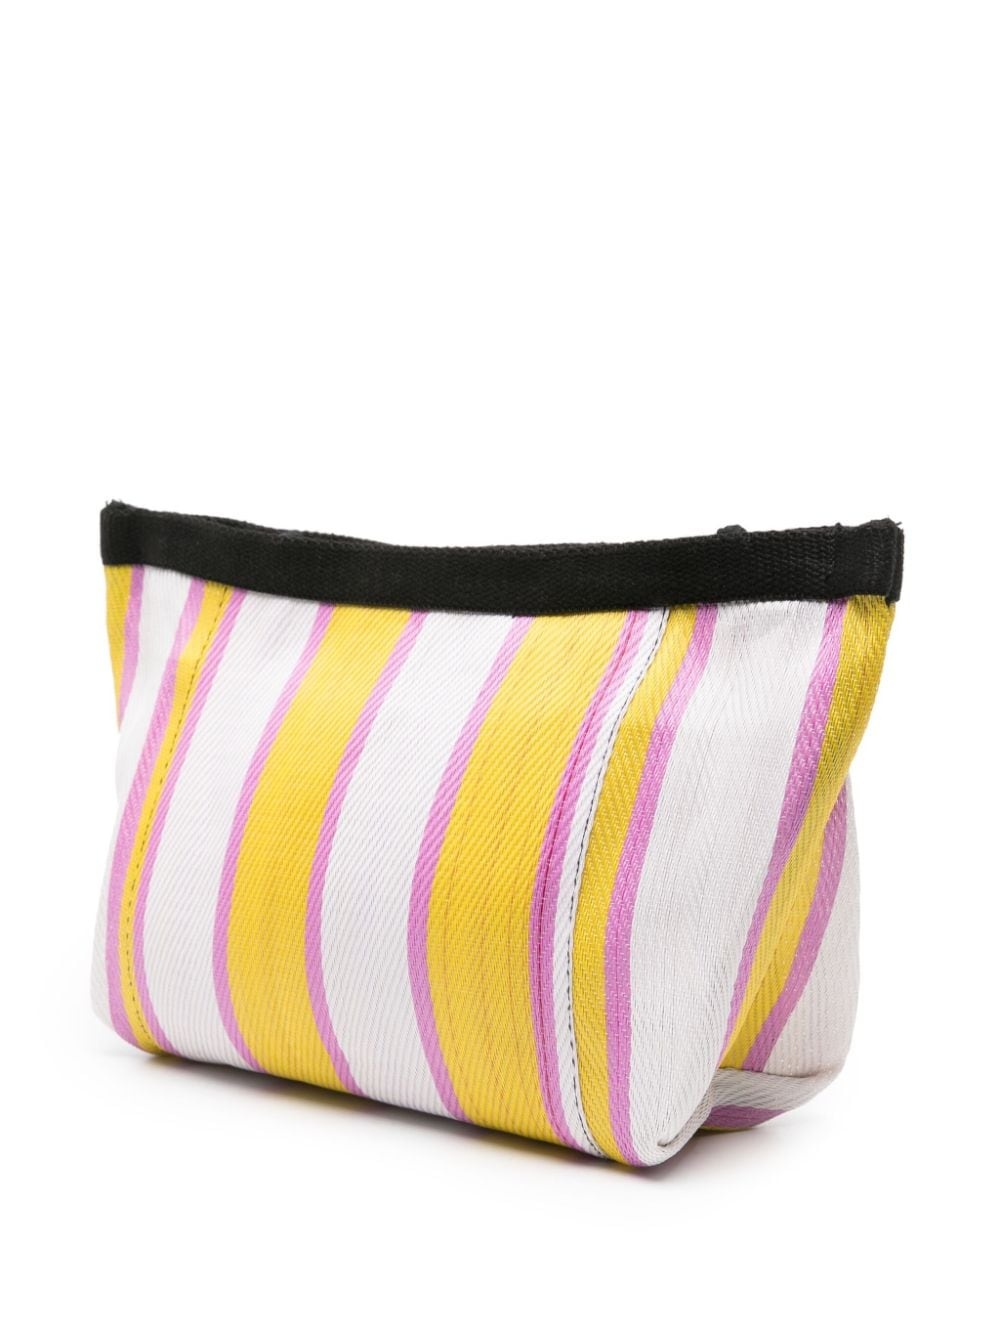 Powden striped clutch bag - 3